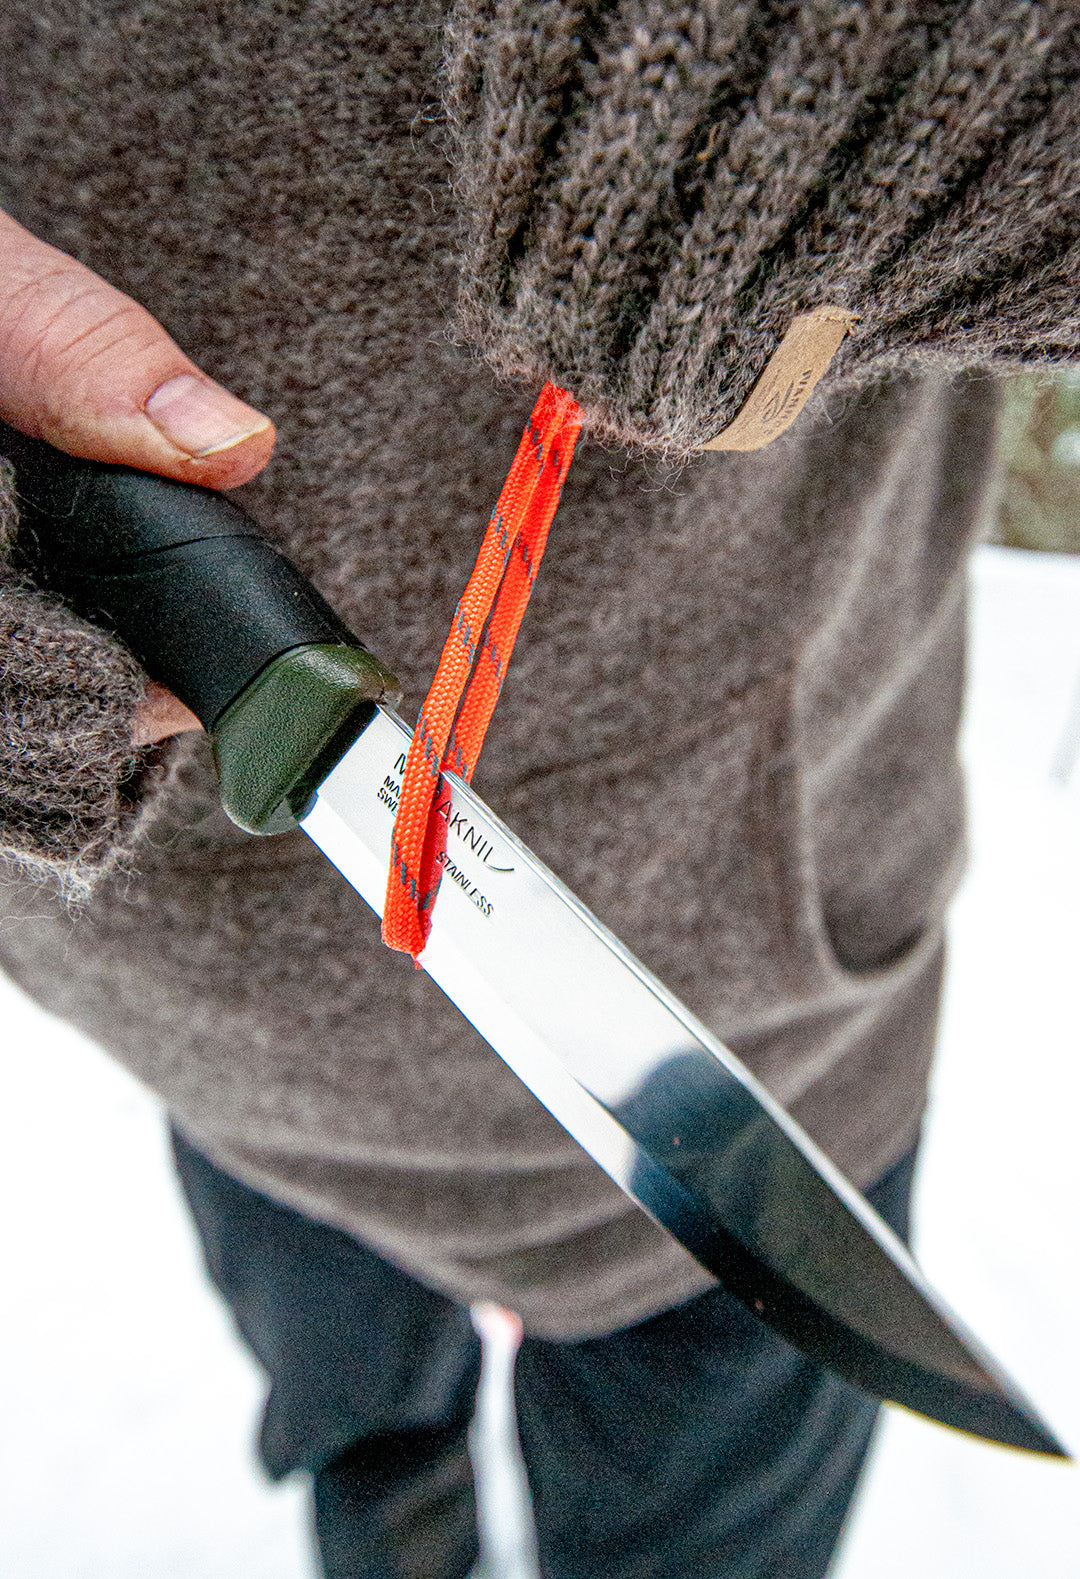 Morakniv Companion Knife Used to Cut Paracord